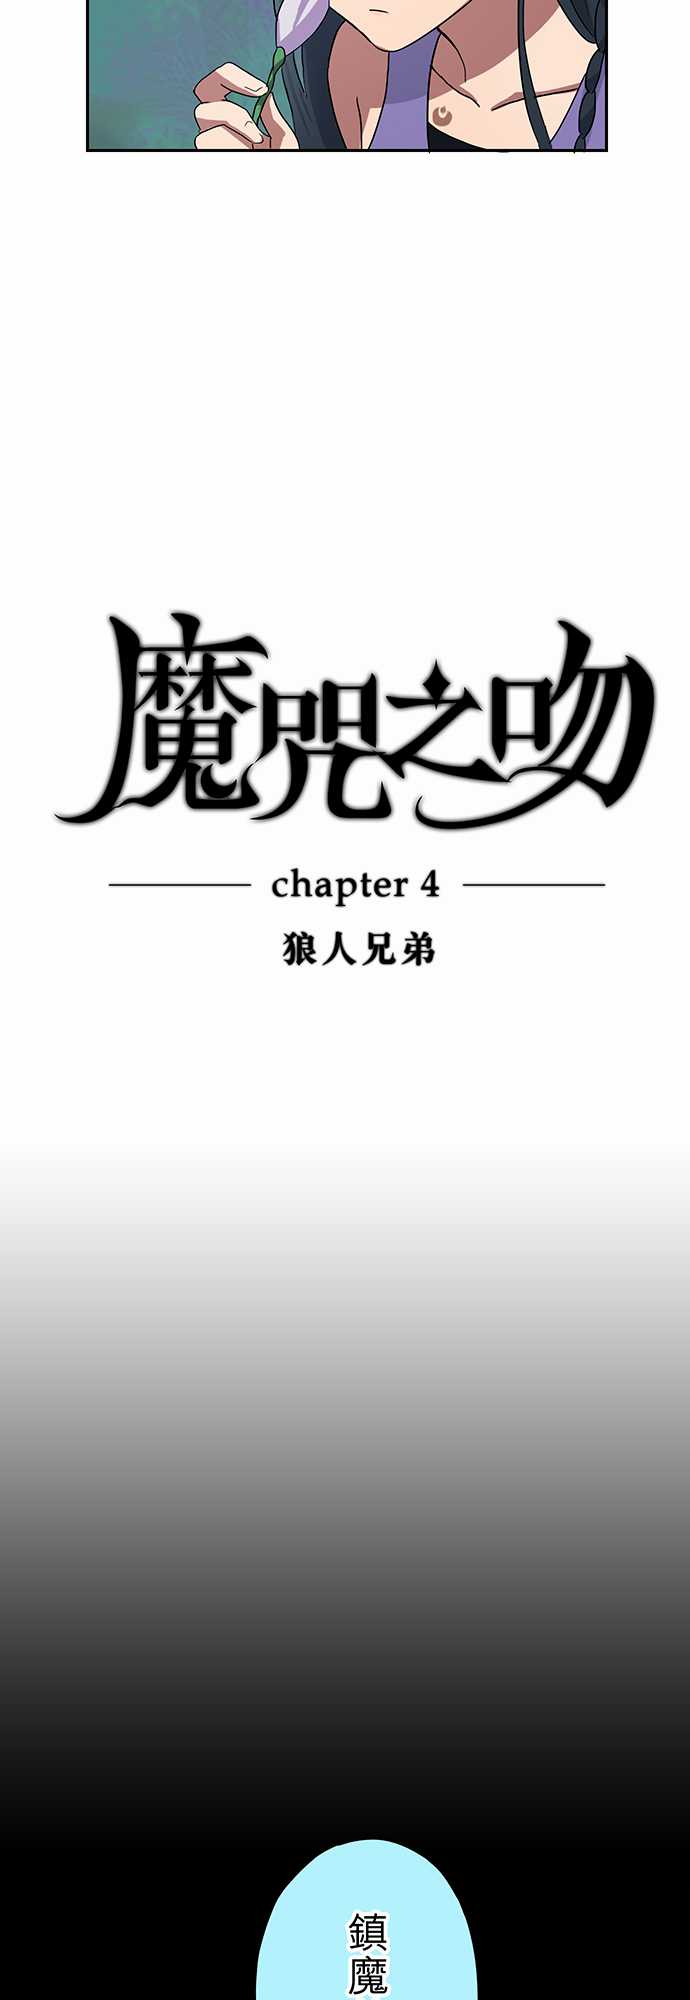 chapter 4 狼人兄弟